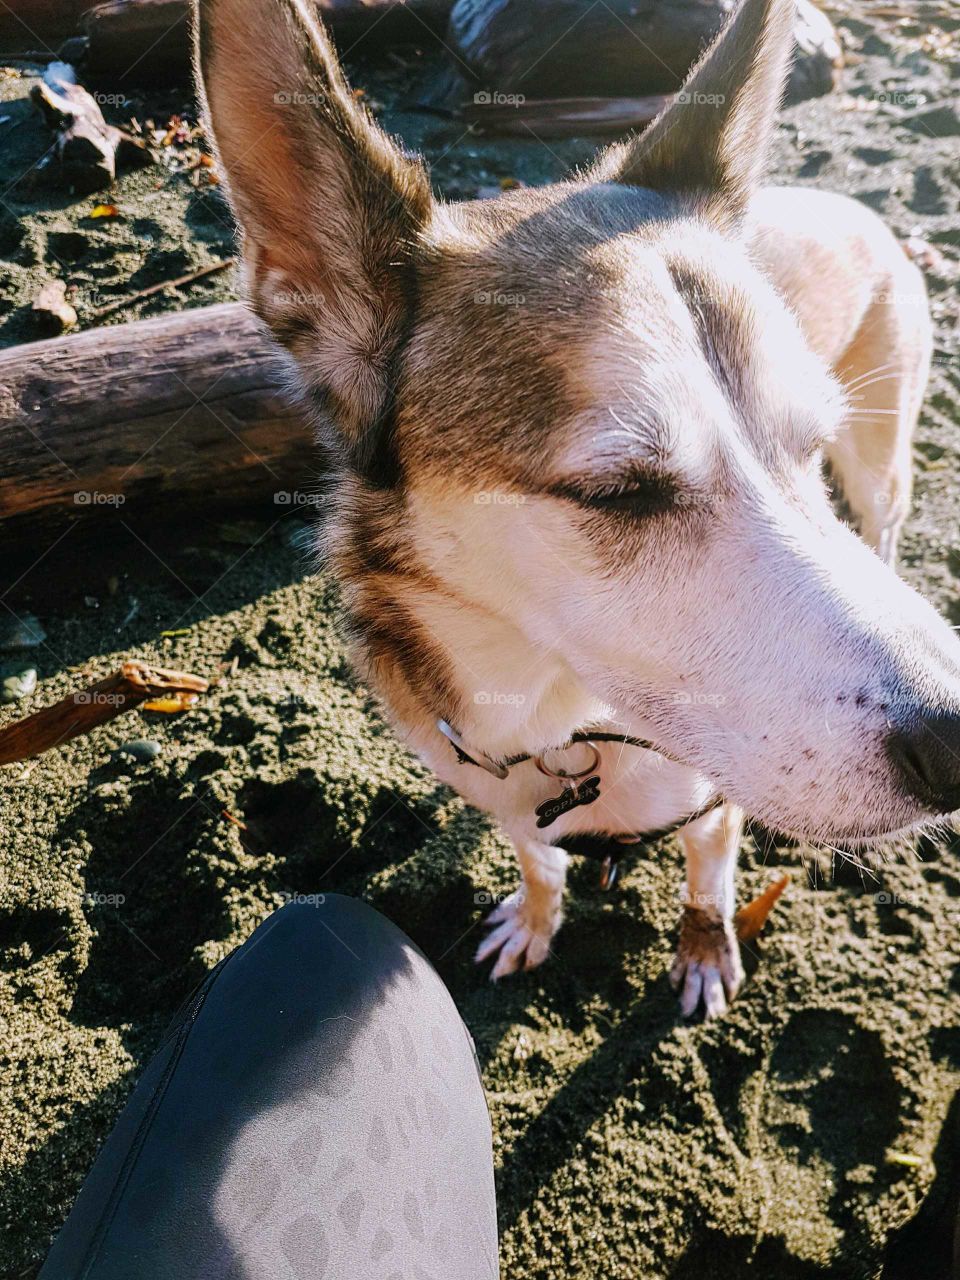 retired sled dog at beach :)